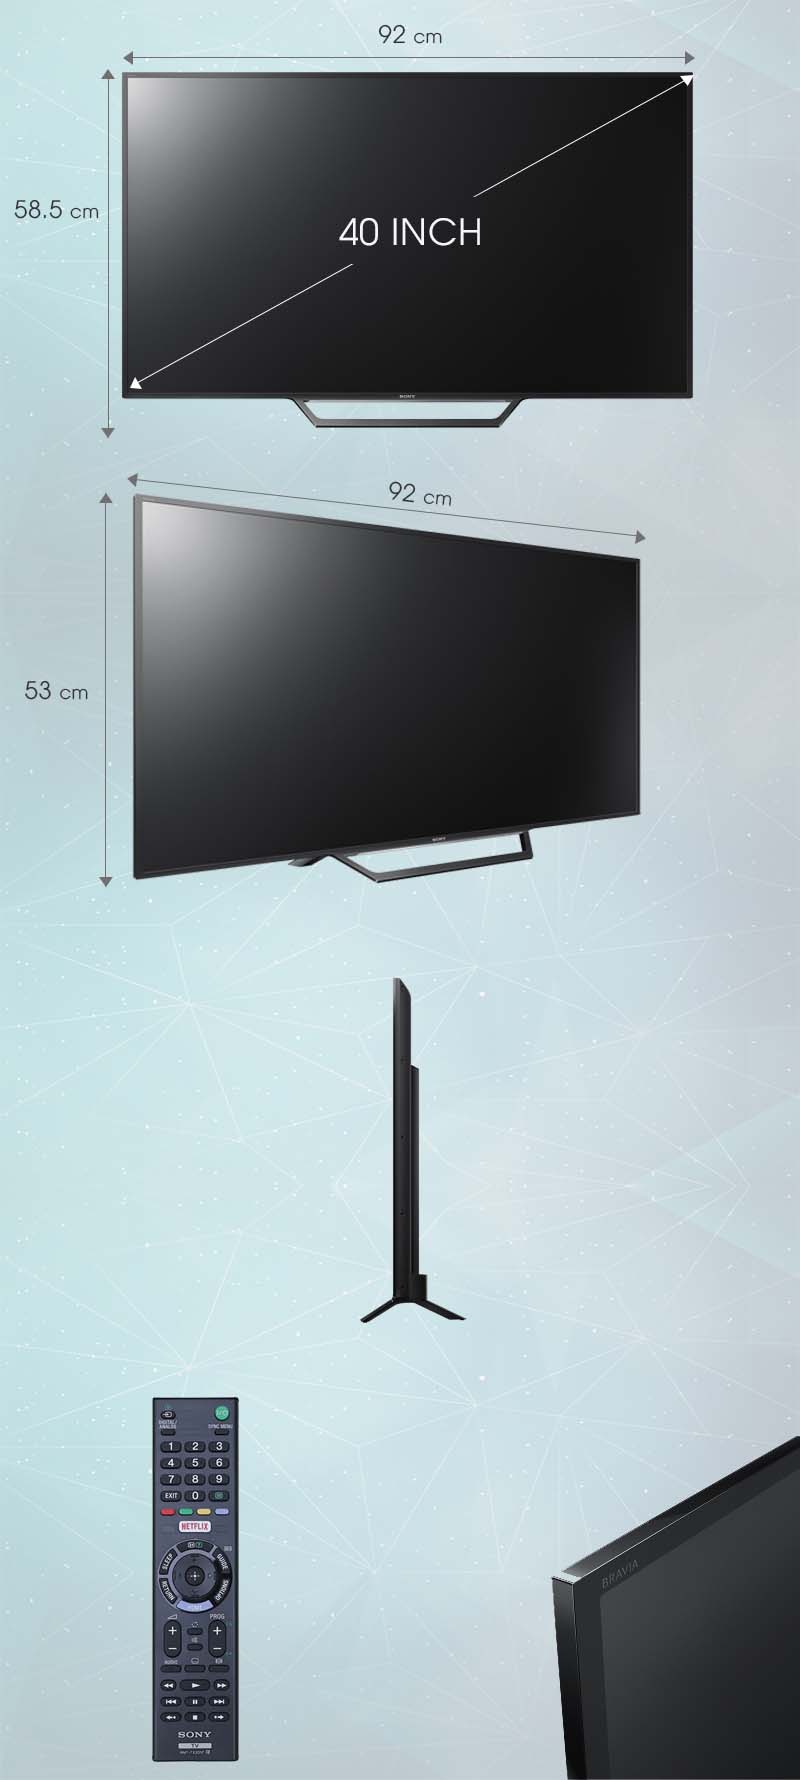 Internet Tivi Sony 40 inch KDL-40W650D - Kích thước tivi